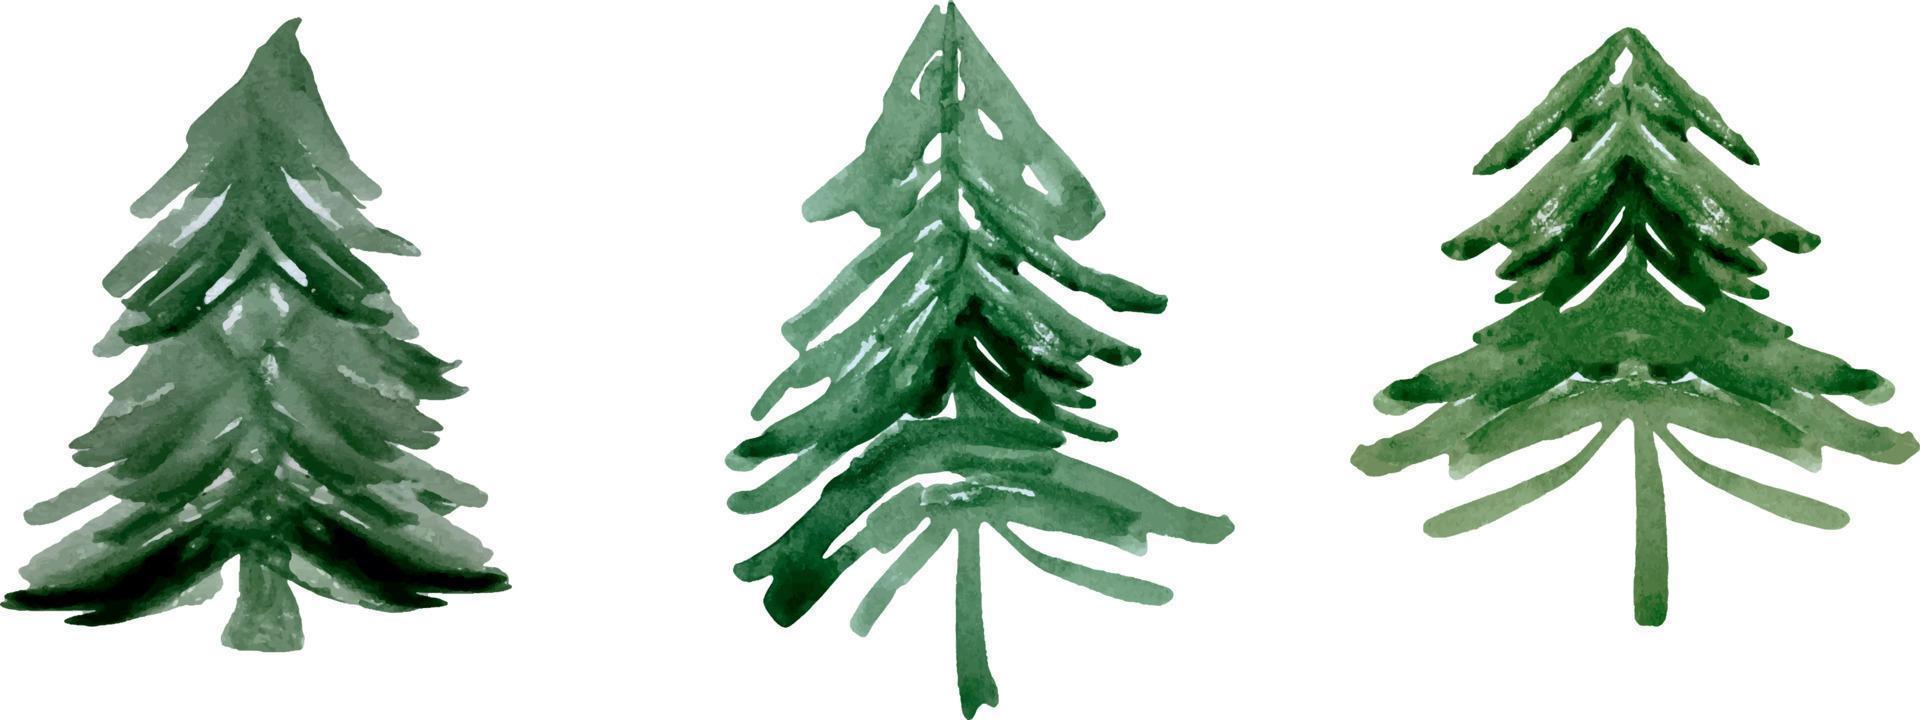 aquarellsatz grüne nadelbäume lokalisiert auf weiß vektor